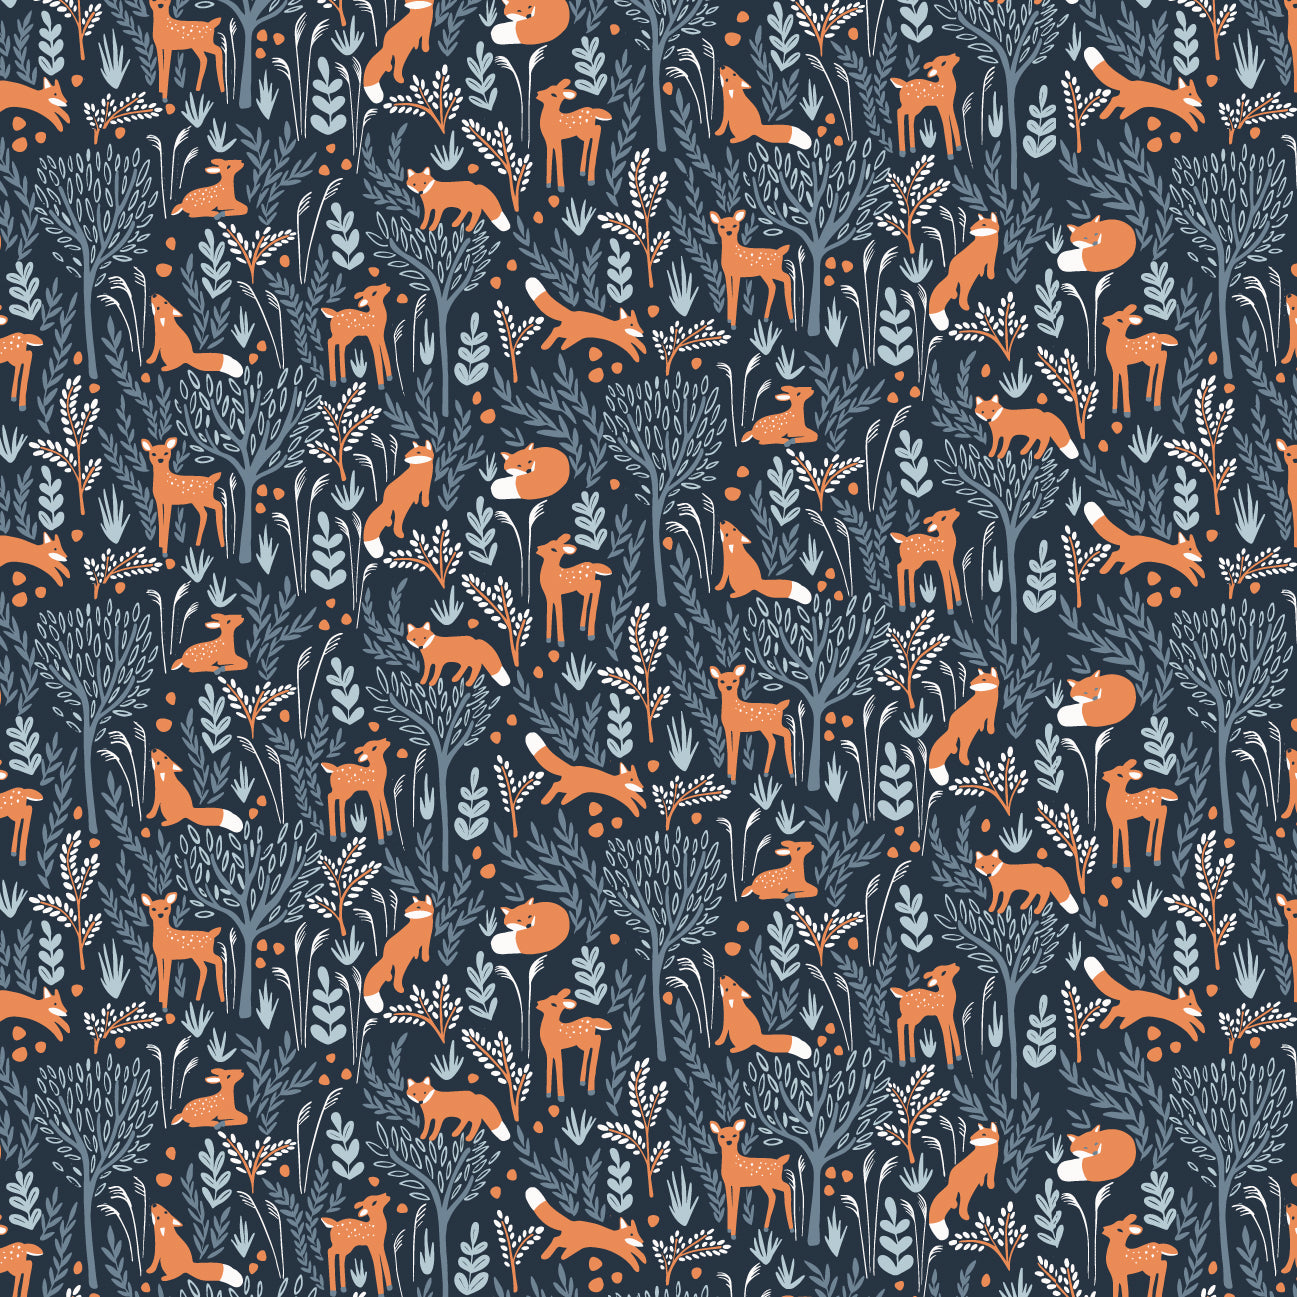 Adult Sweatshirt - Deer & Foxes Night Sky